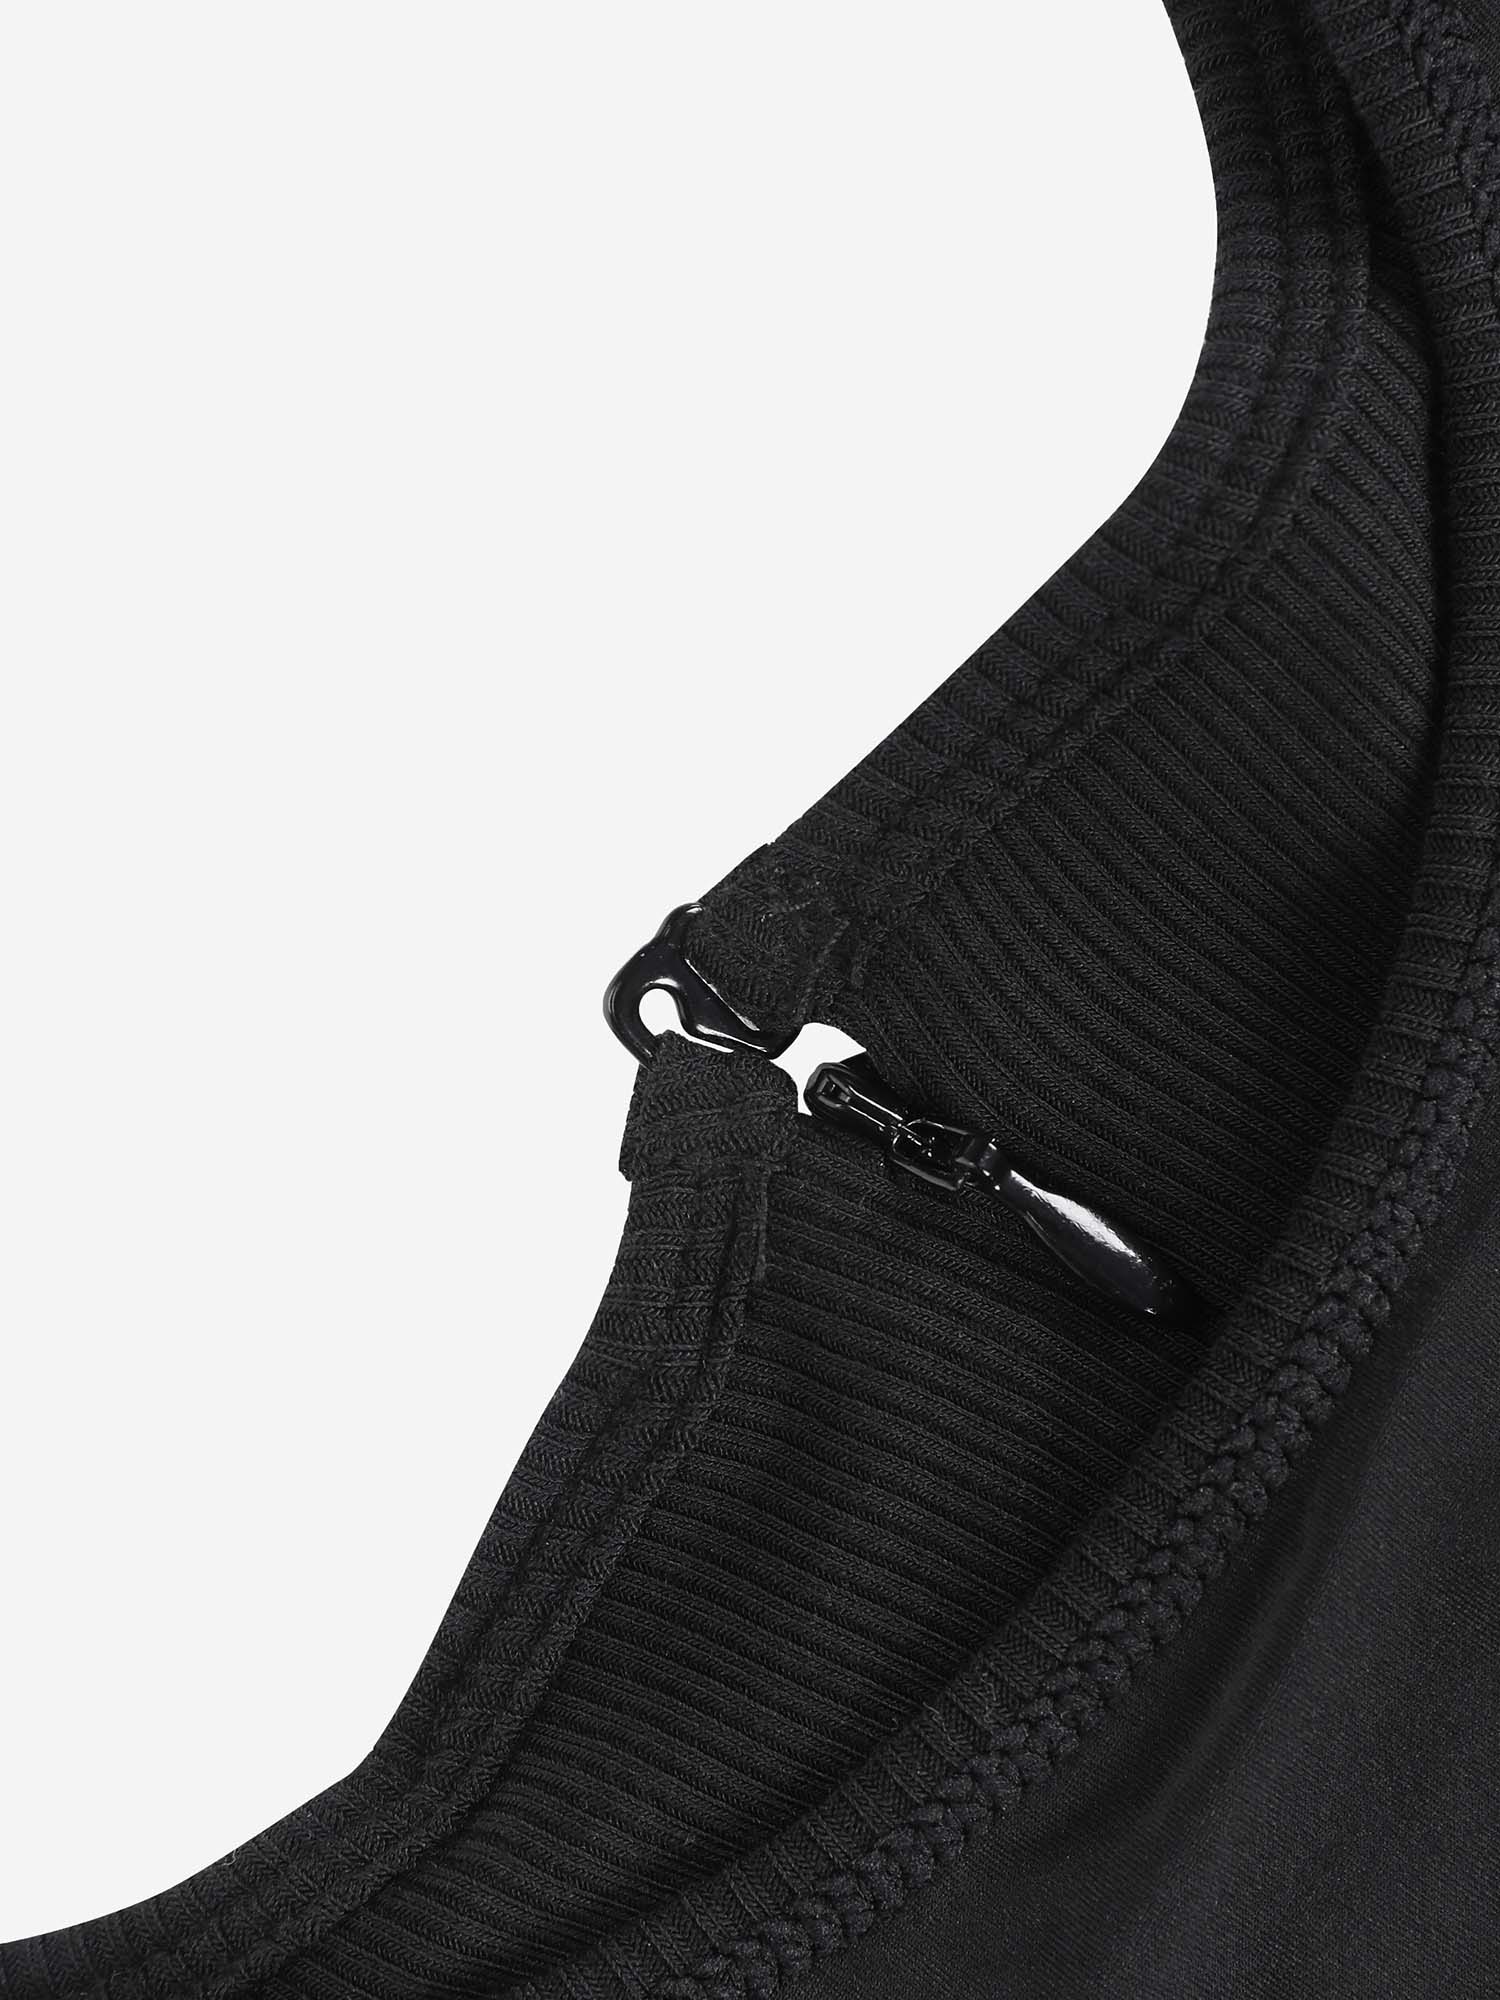 Buy Popilush Crew Neck Shaper Dress Built-in Shapewear Bra 9 in 1  Sleeveless Casual Summer Midi Bodycon Dress with Zipper, Black-long Dress,  Small at